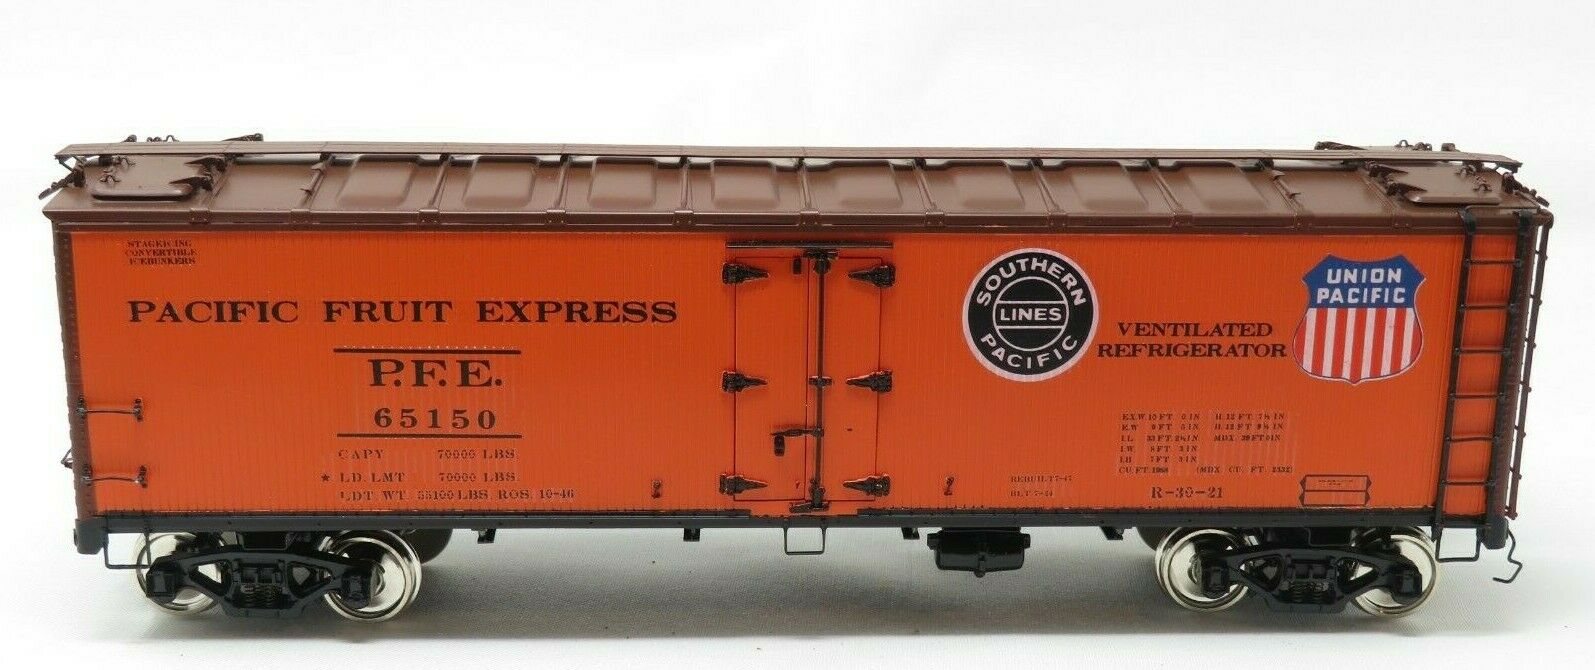 Precision 16259-1 Brass Pacific Fruit Express-Refrigerator Car Class R-30-21 NIB